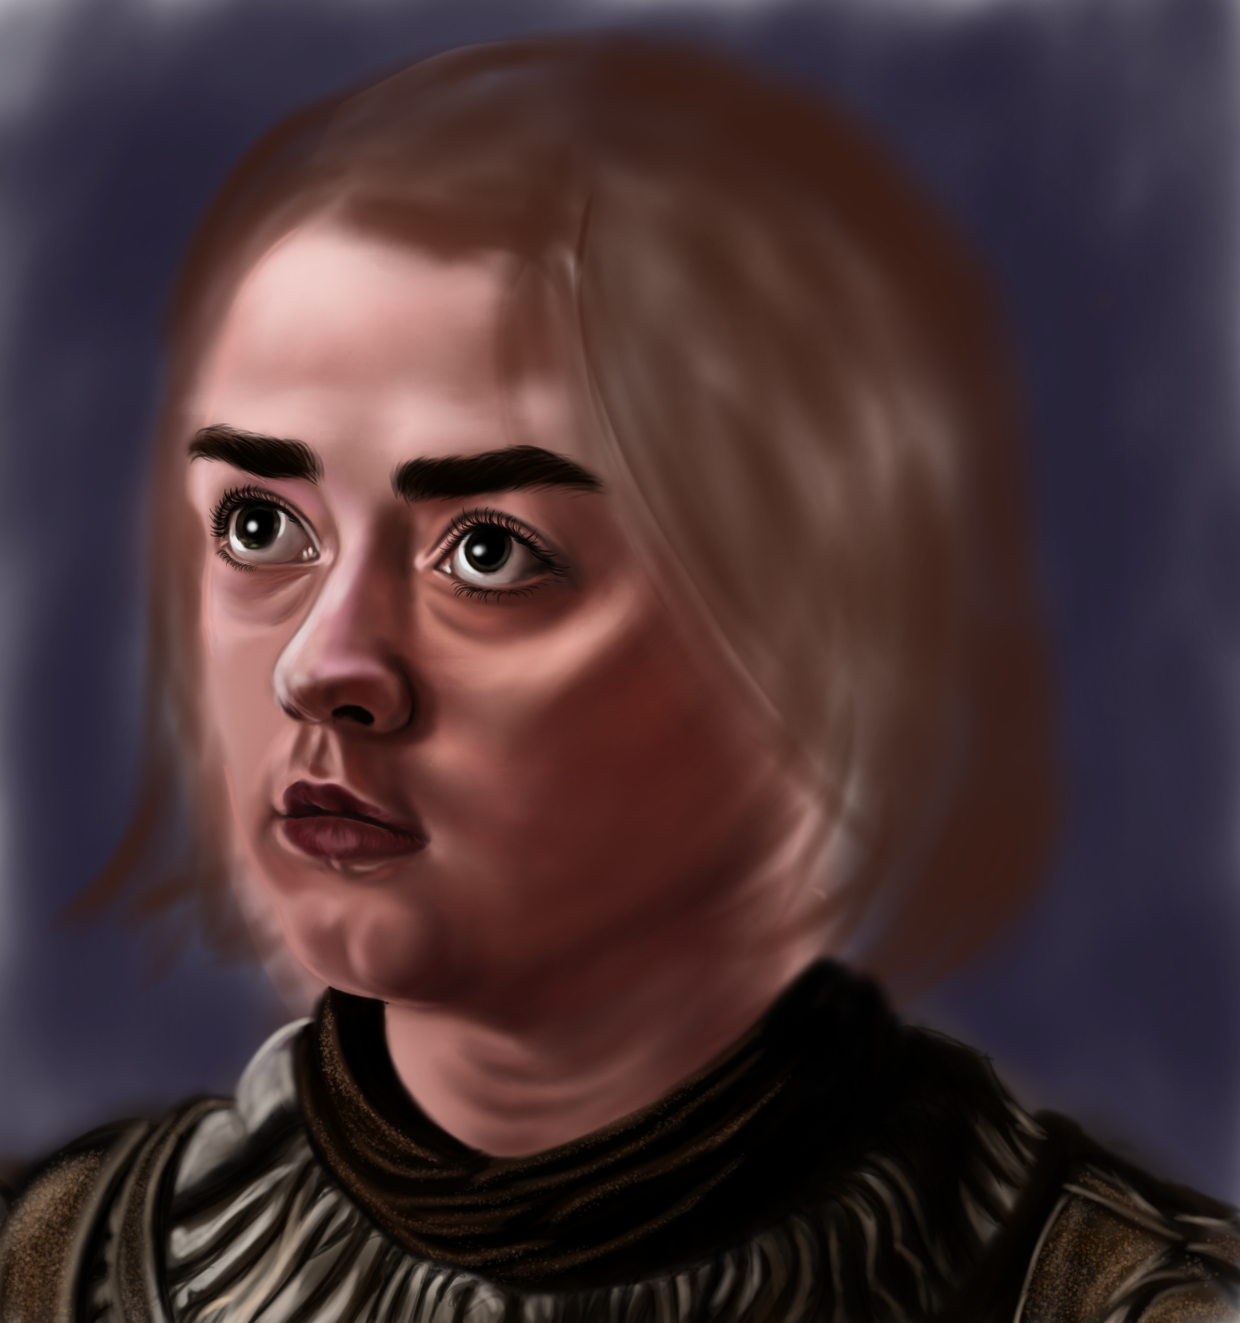 Francisftlp-Digital Drawing of Arya Stark-Step 8.png